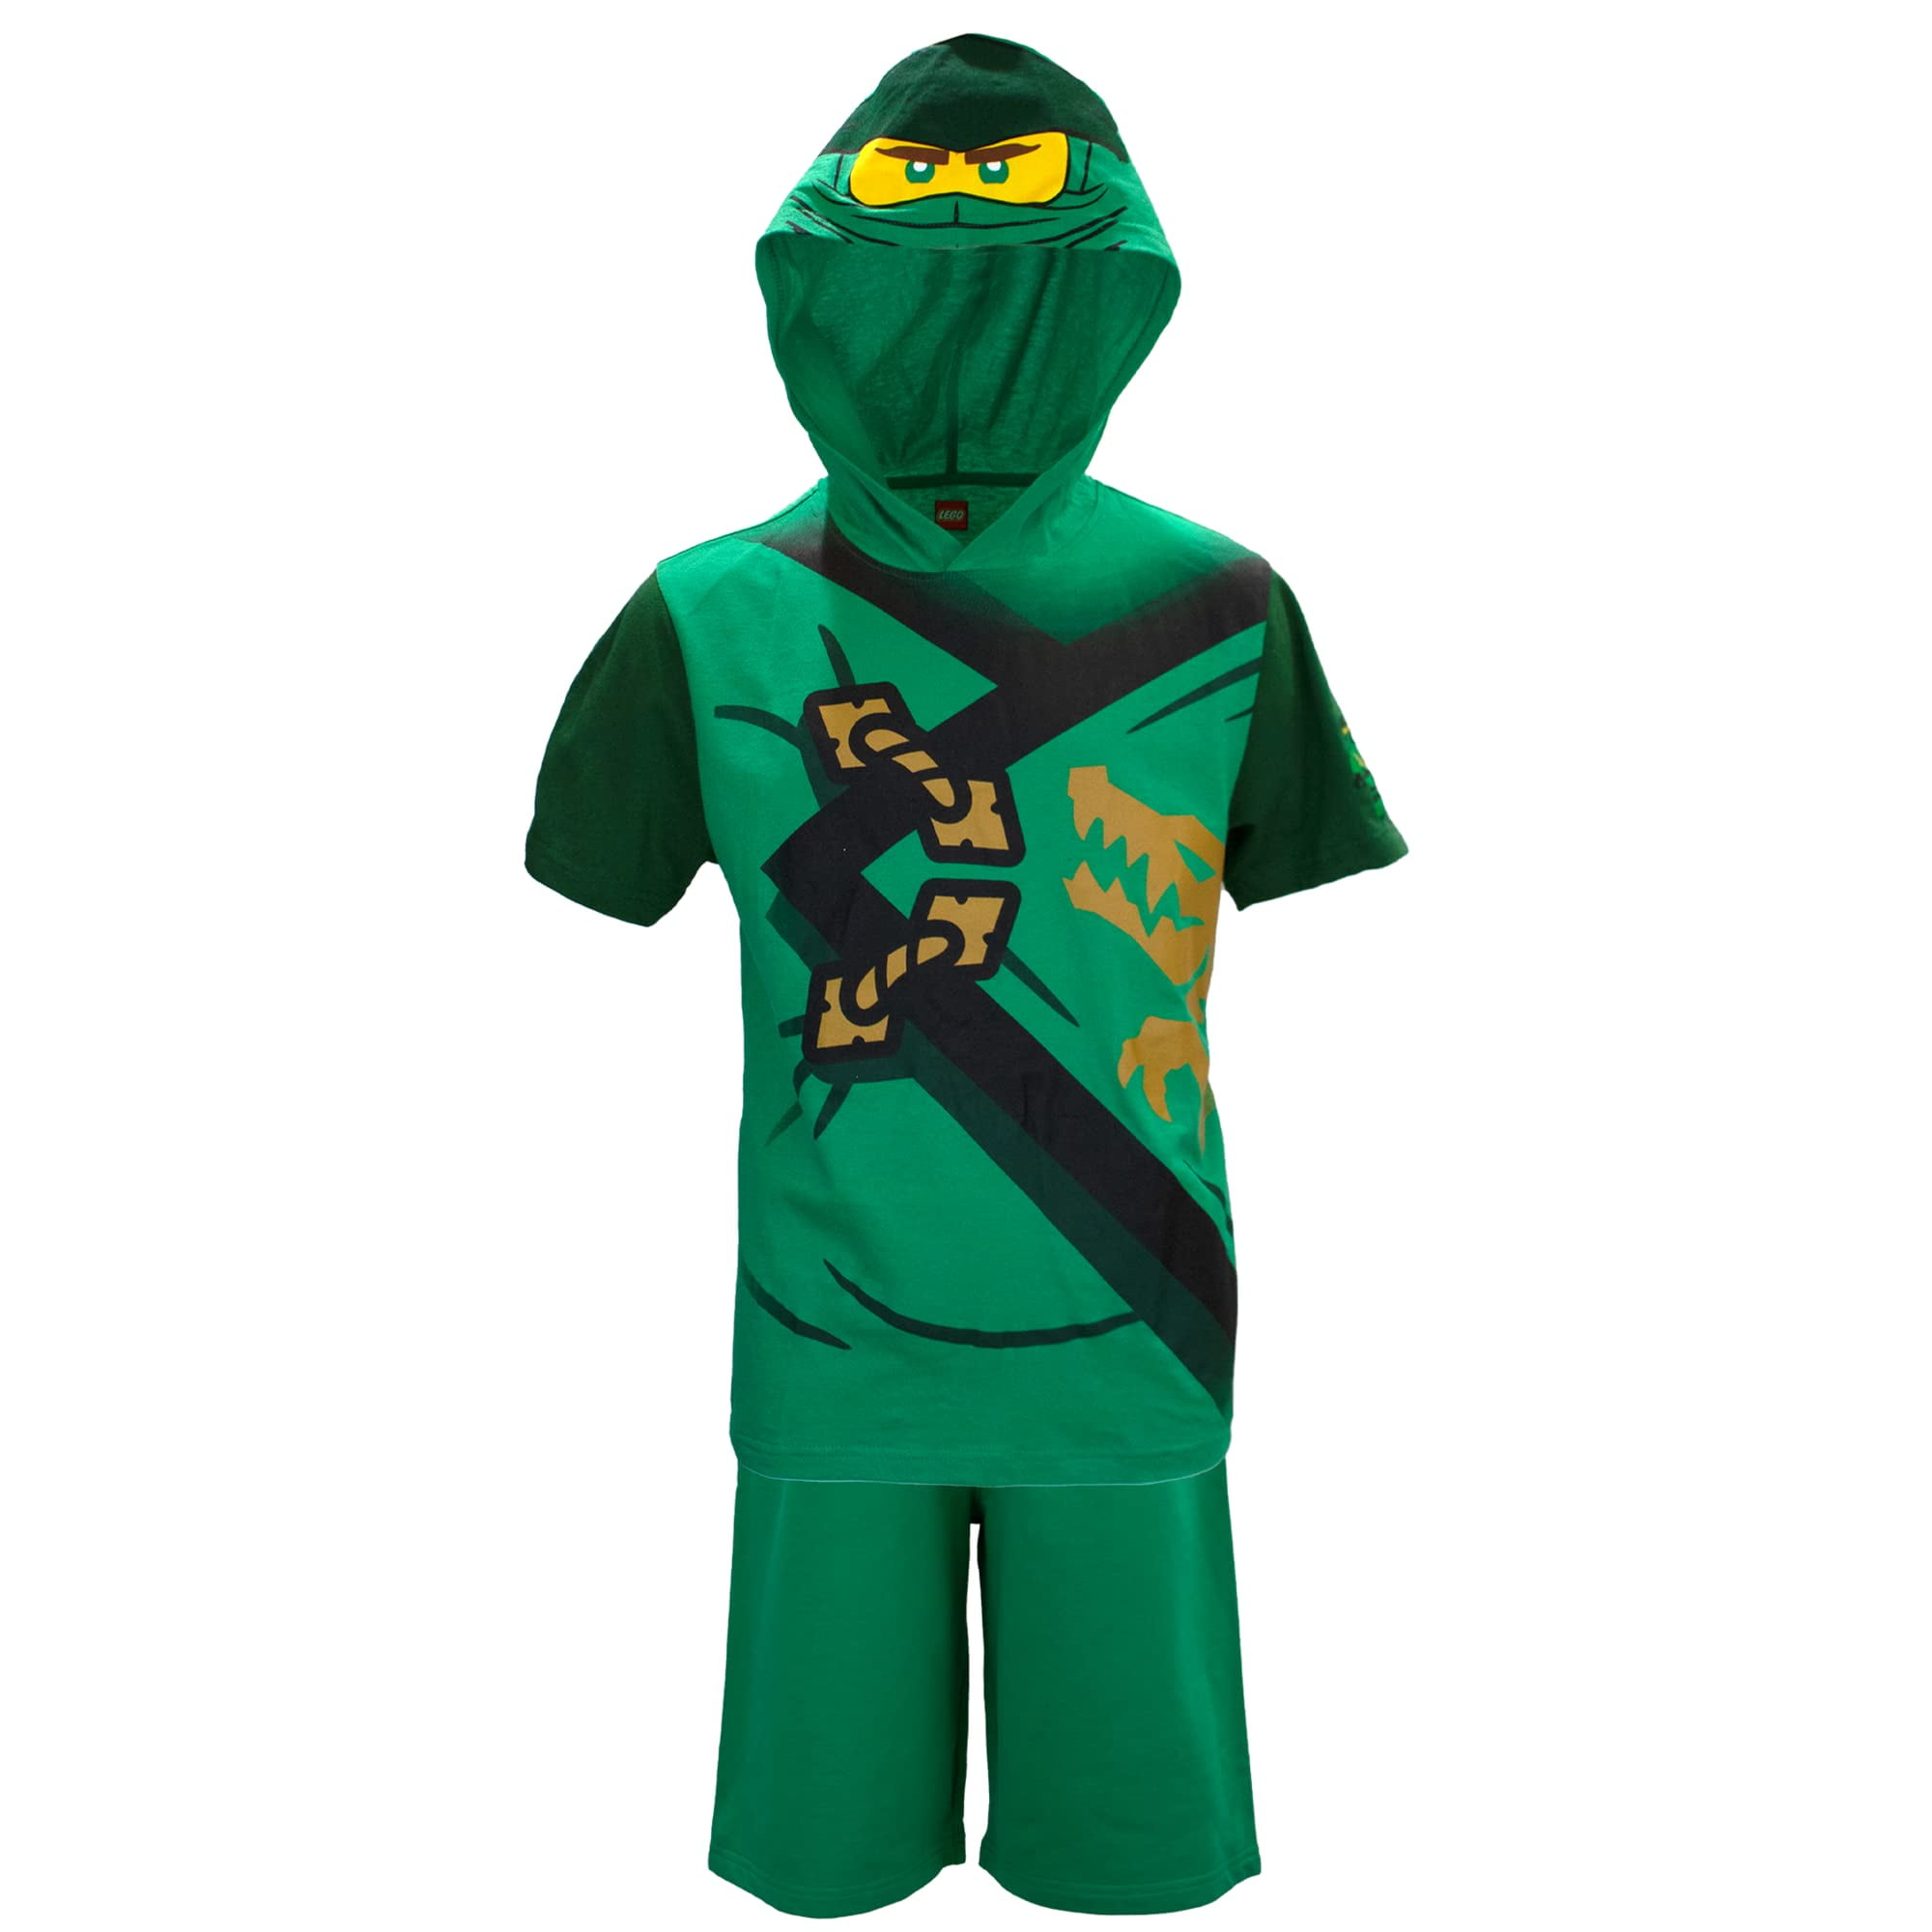 LEGO Ninjago Boys Ninjago Set with Green Shorts and Matching Lloyd cosplay  Hooded T-Shirt, Size 10/12